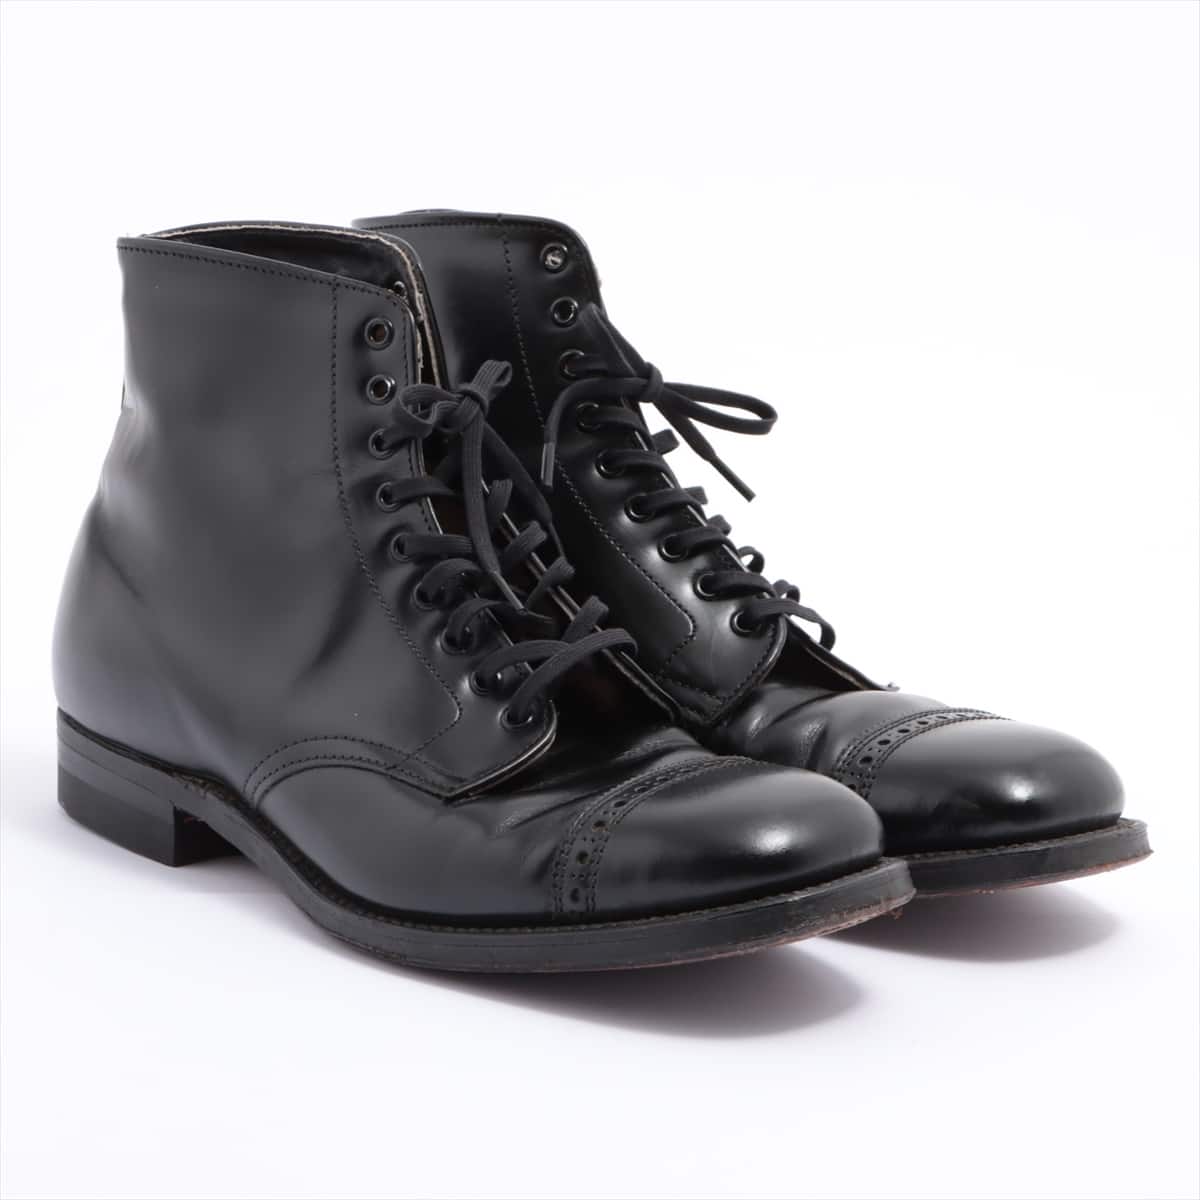 Alden Leather Boots 4 Ladies' Black Straight tip